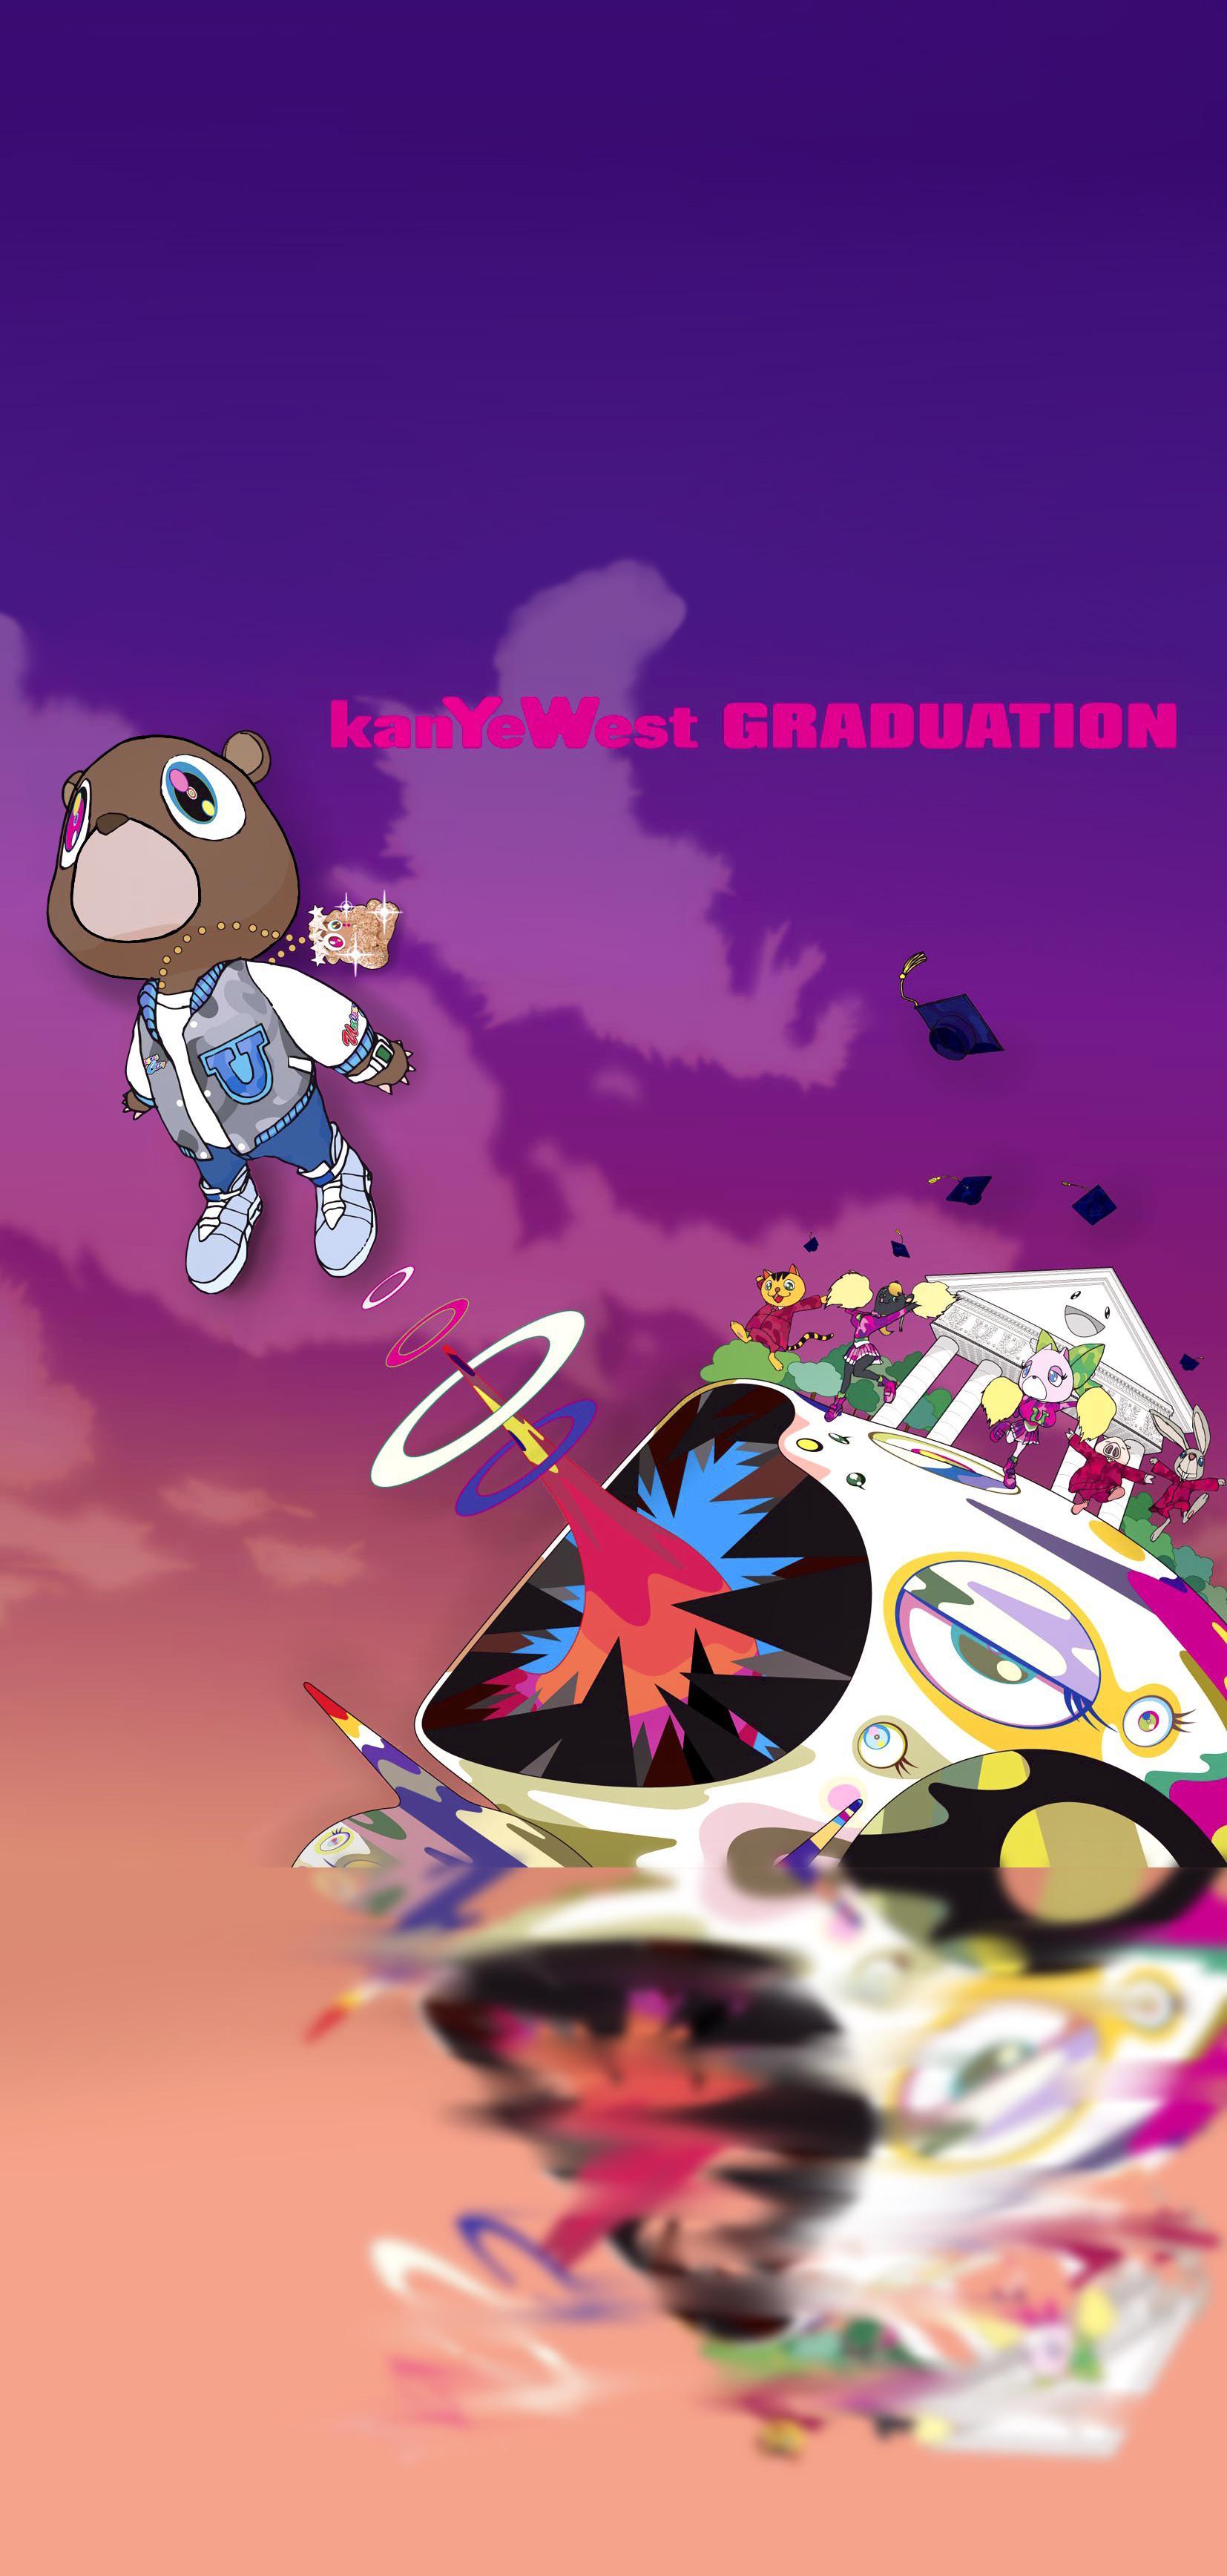 Graduation iPhone Wallpaper R Kanye